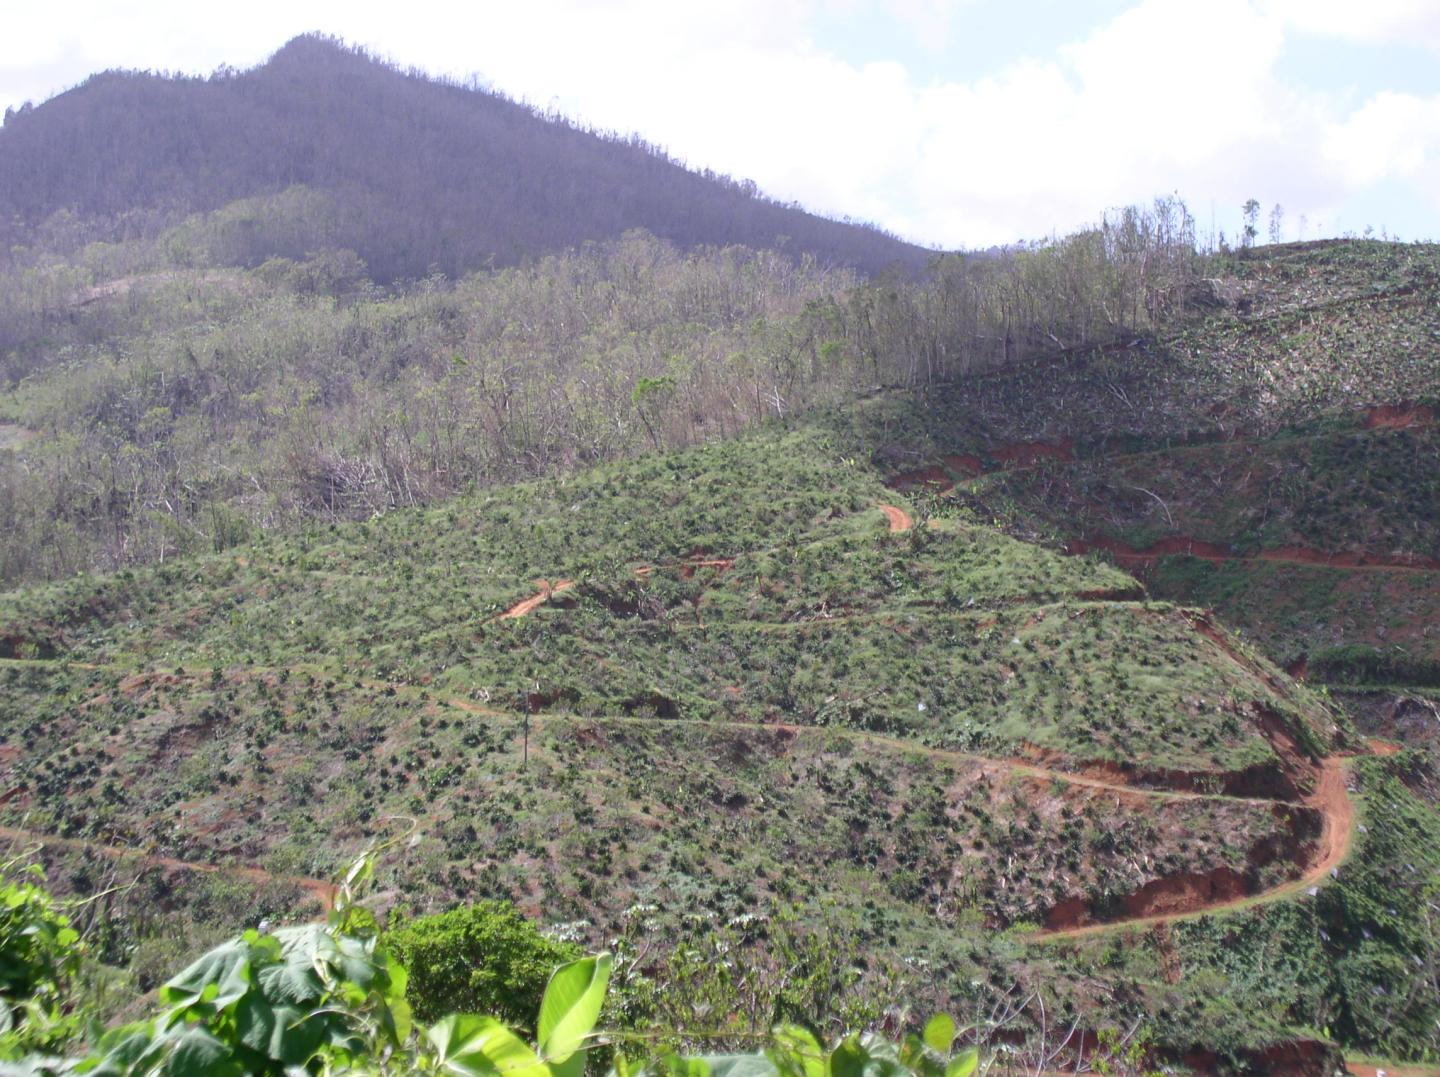 Coffee farm and forest destruction after hurricane María in Utuado, PR.